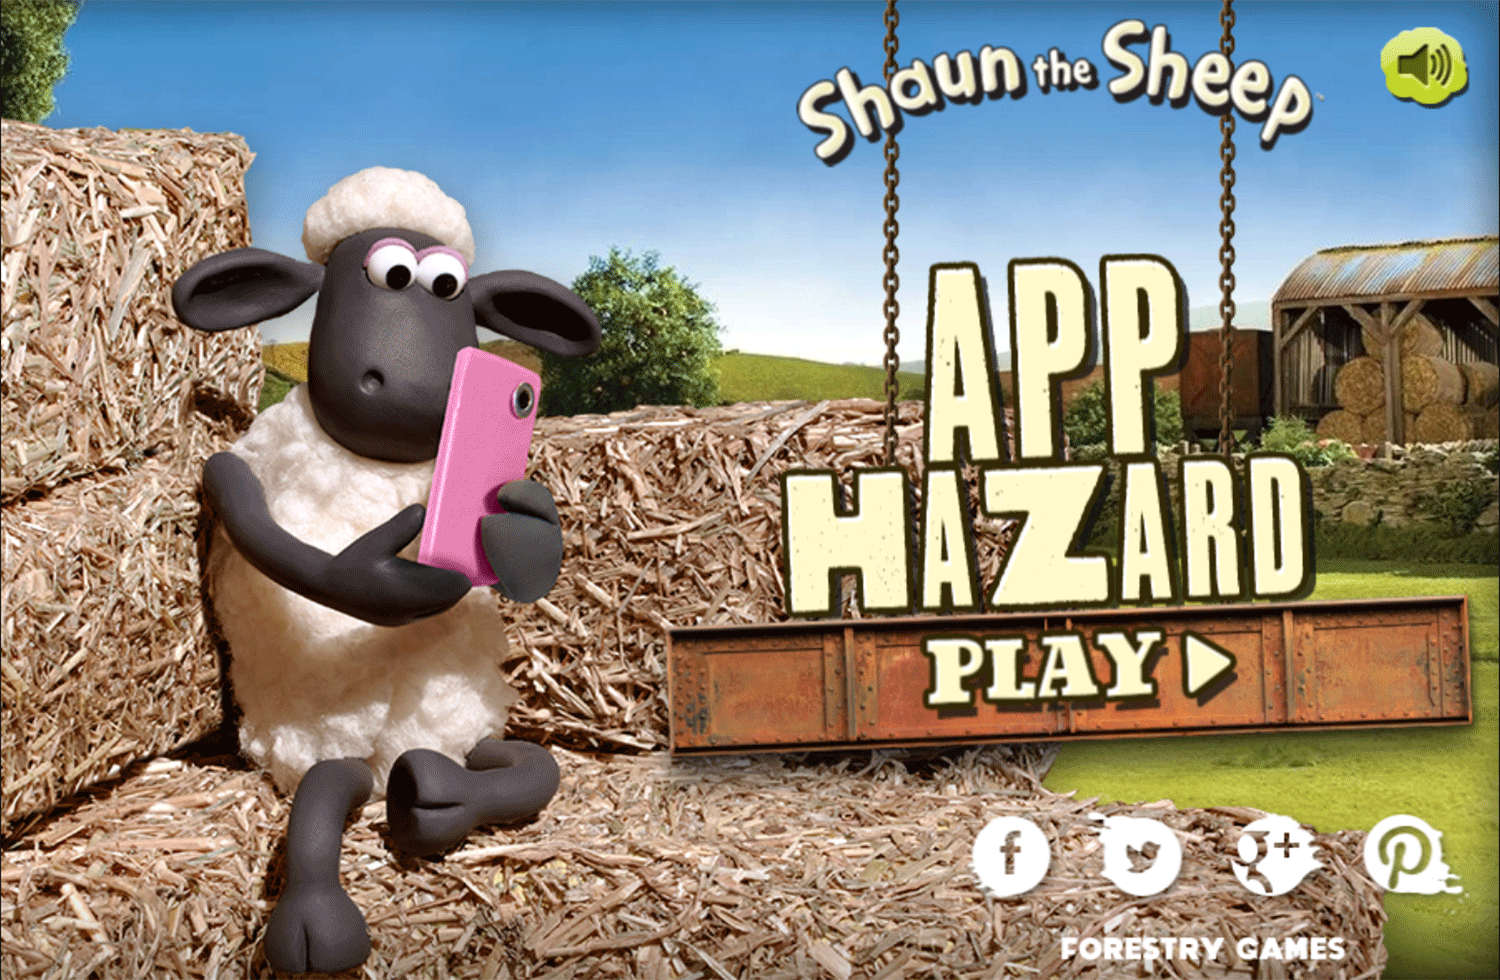 Shaun the Sheep App Hazard 2 Game Welcome Screen Screenshot.